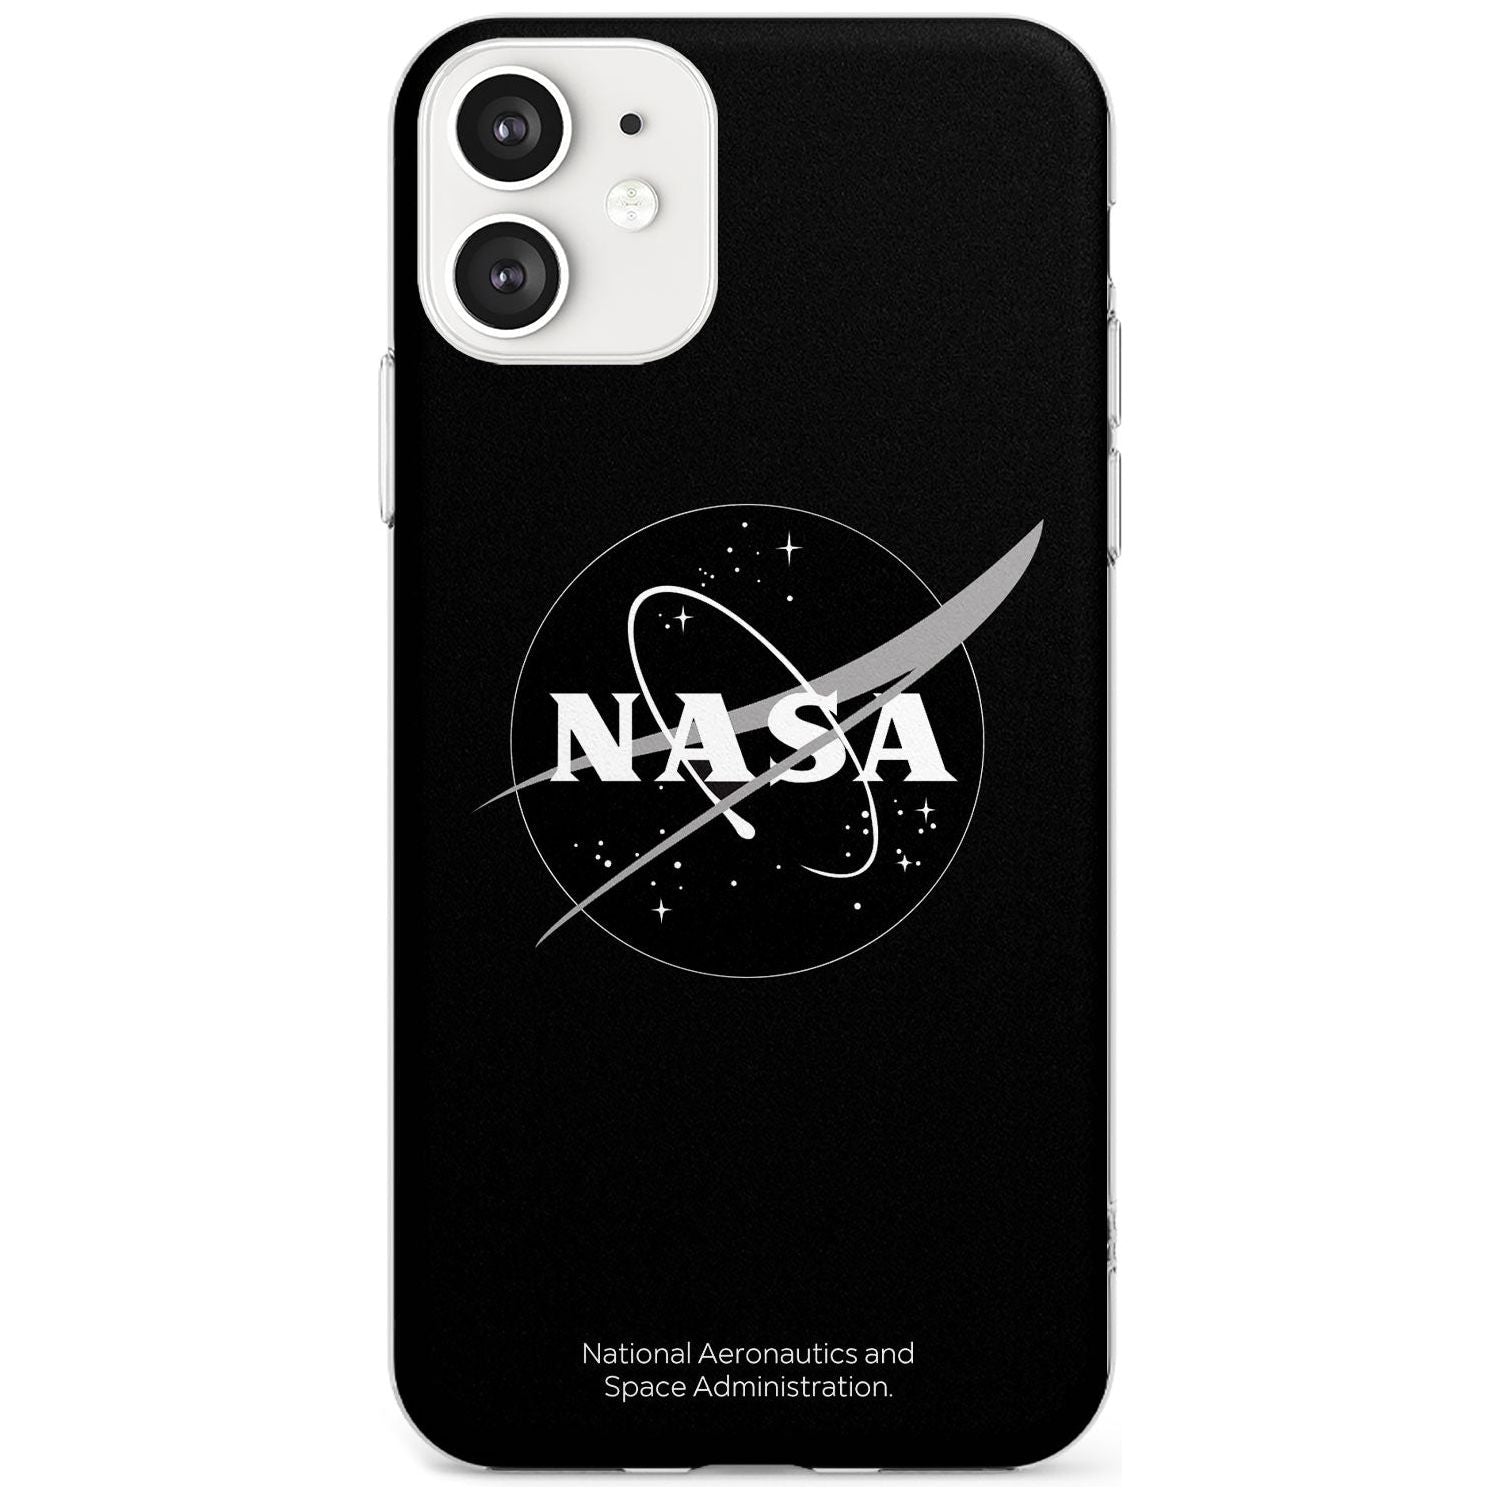 Dark NASA Meatball Slim TPU Phone Case for iPhone 11